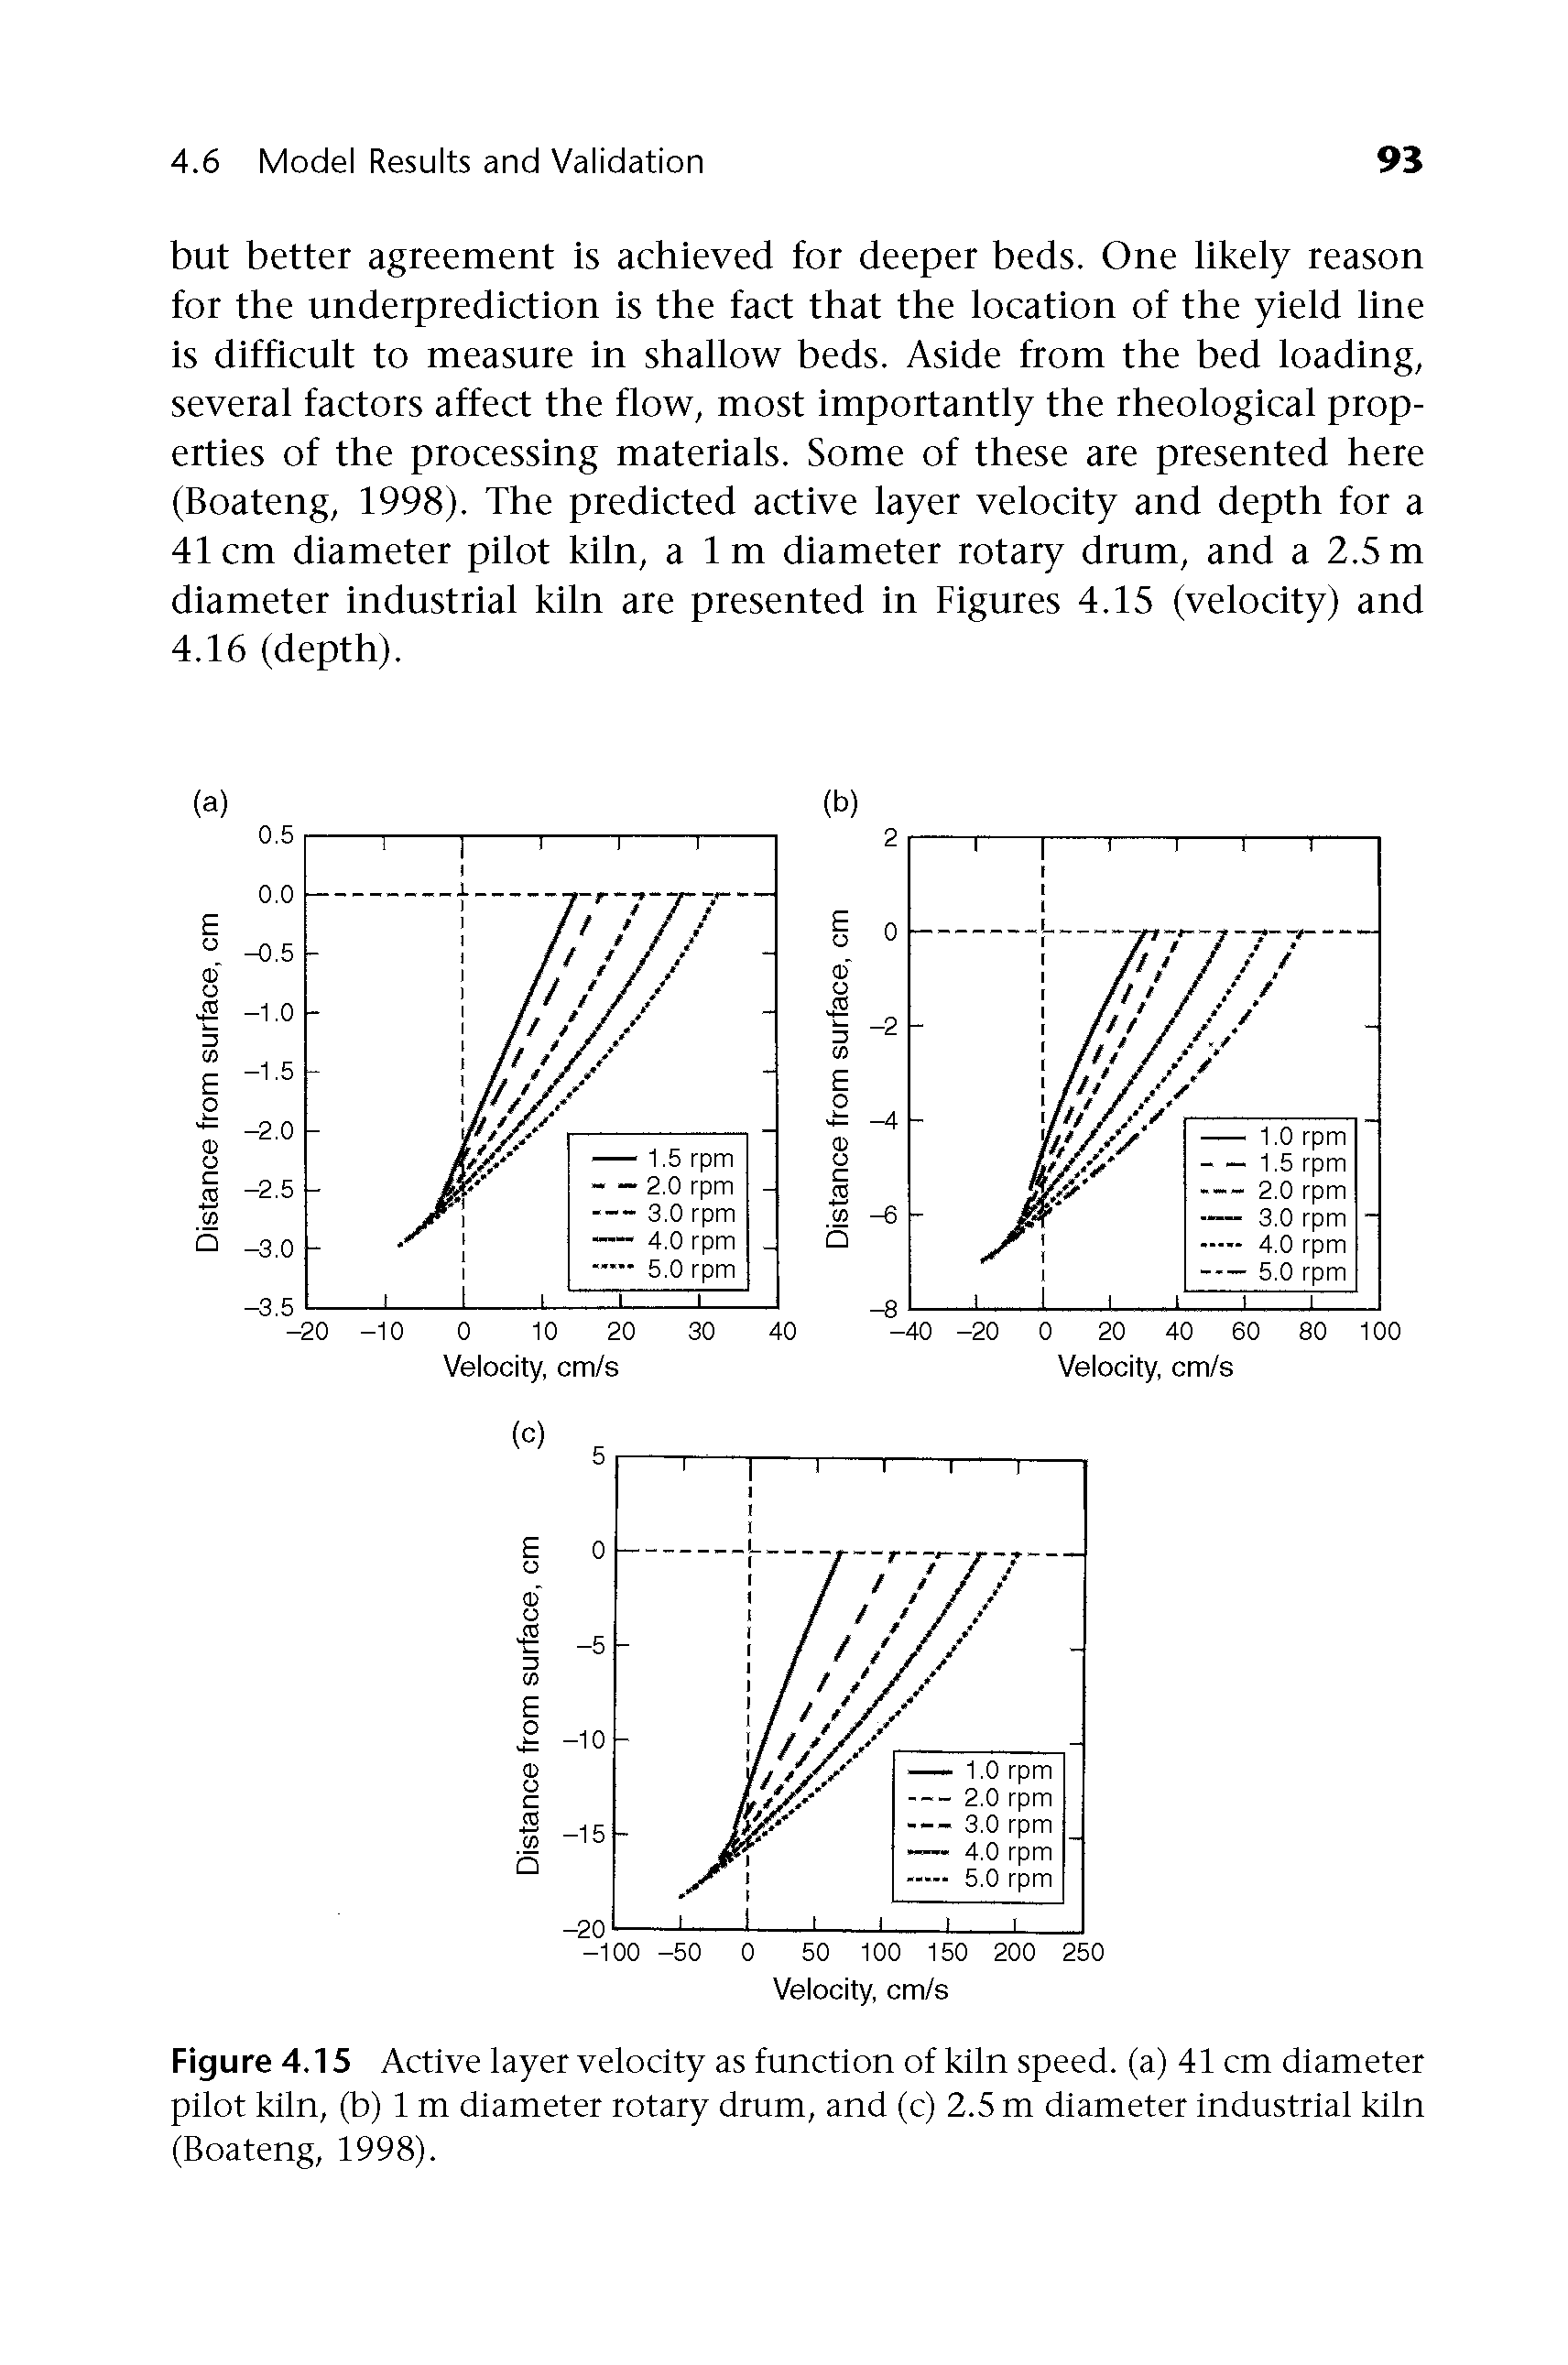 Figure 4.15 Active layer velocity as function of kiln speed, (a) 41 cm diameter pilot kiln, (b) 1 m diameter rotary drum, and (c) 2.5 m diameter industrial kiln (Boateng, 1998).